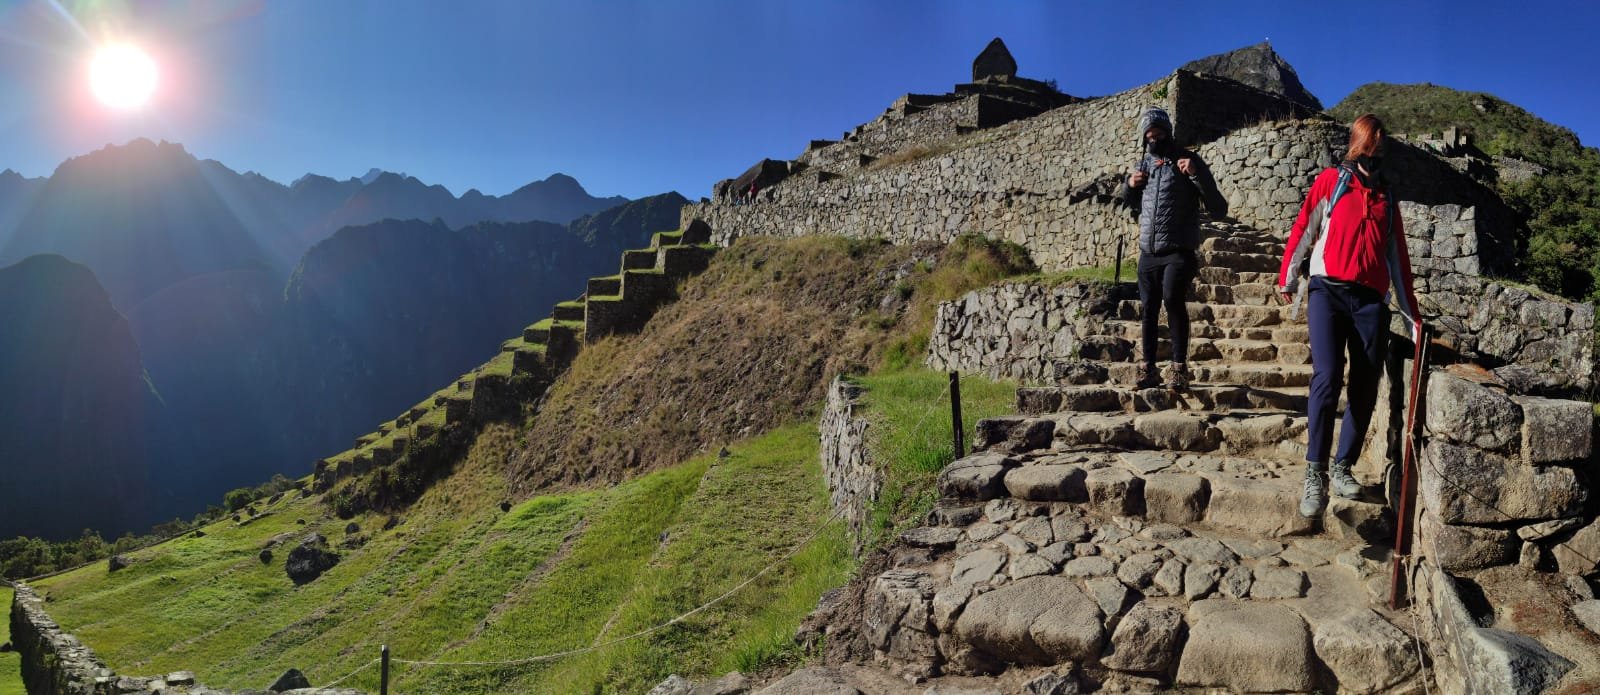 Camino Inca a Machu Picchu 4 DíasPhoto #4 